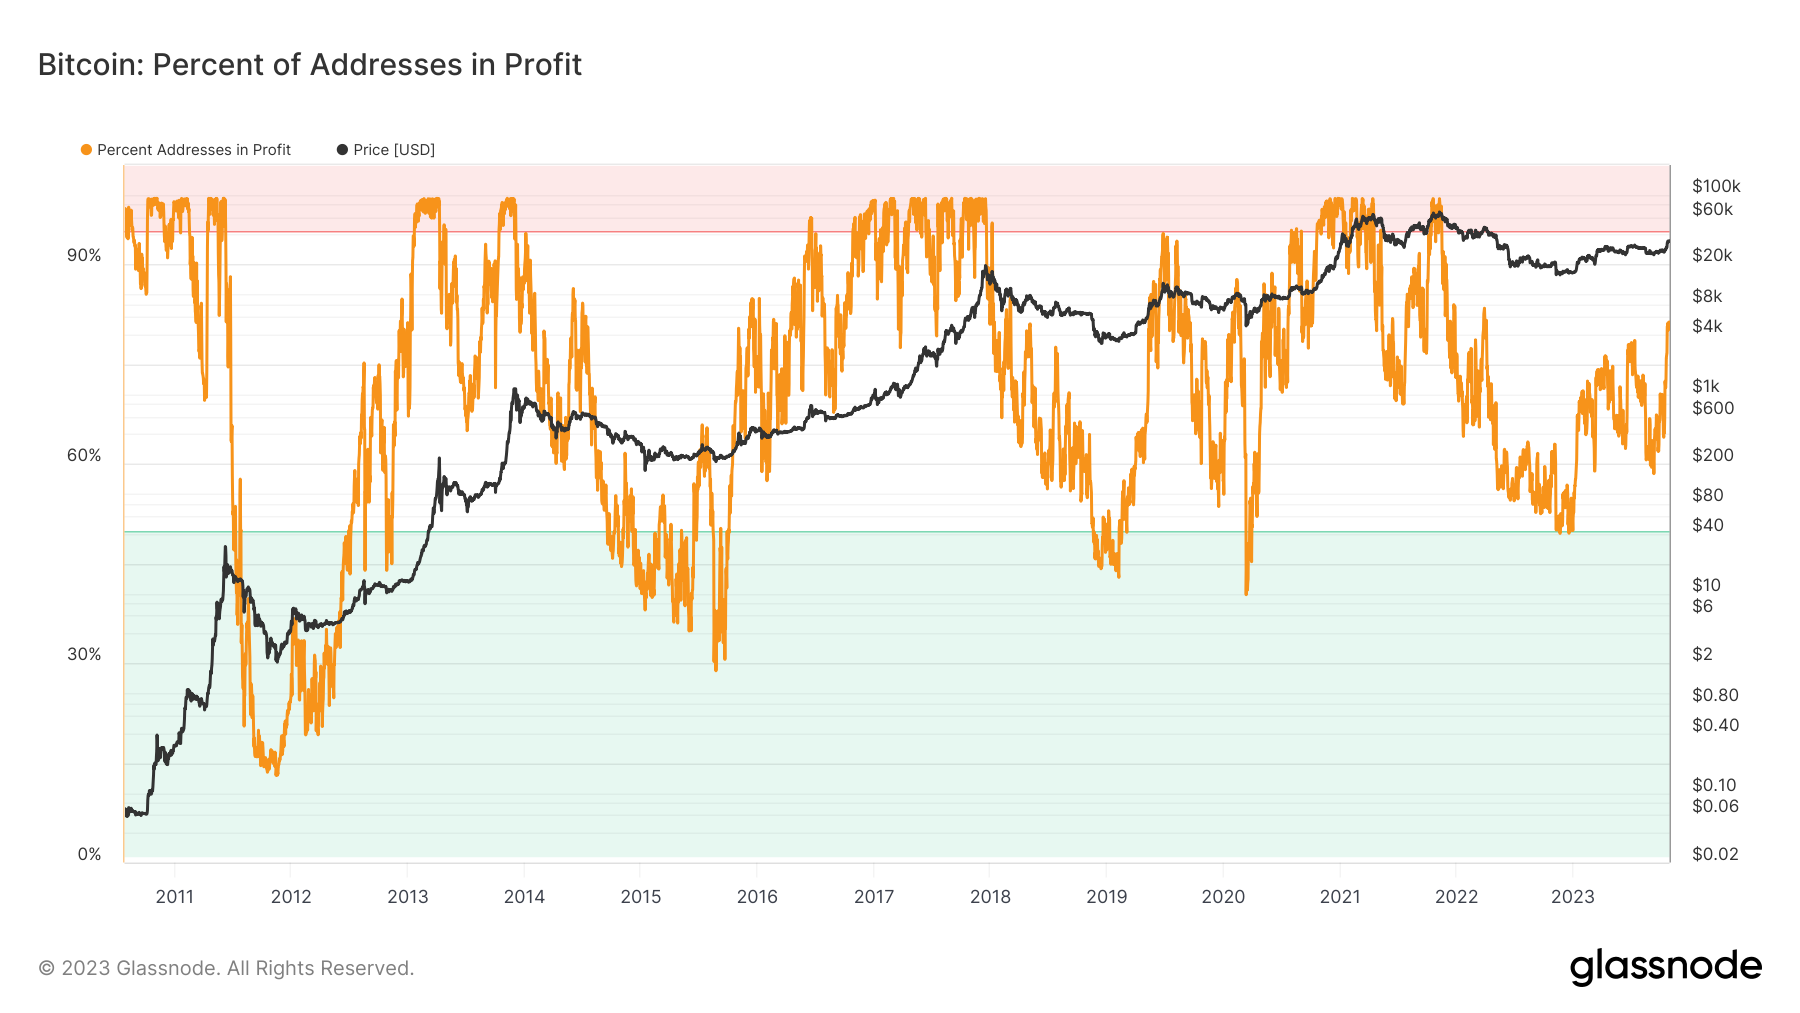 Bitcoin % addresses in profit chart. Source: Glassnode